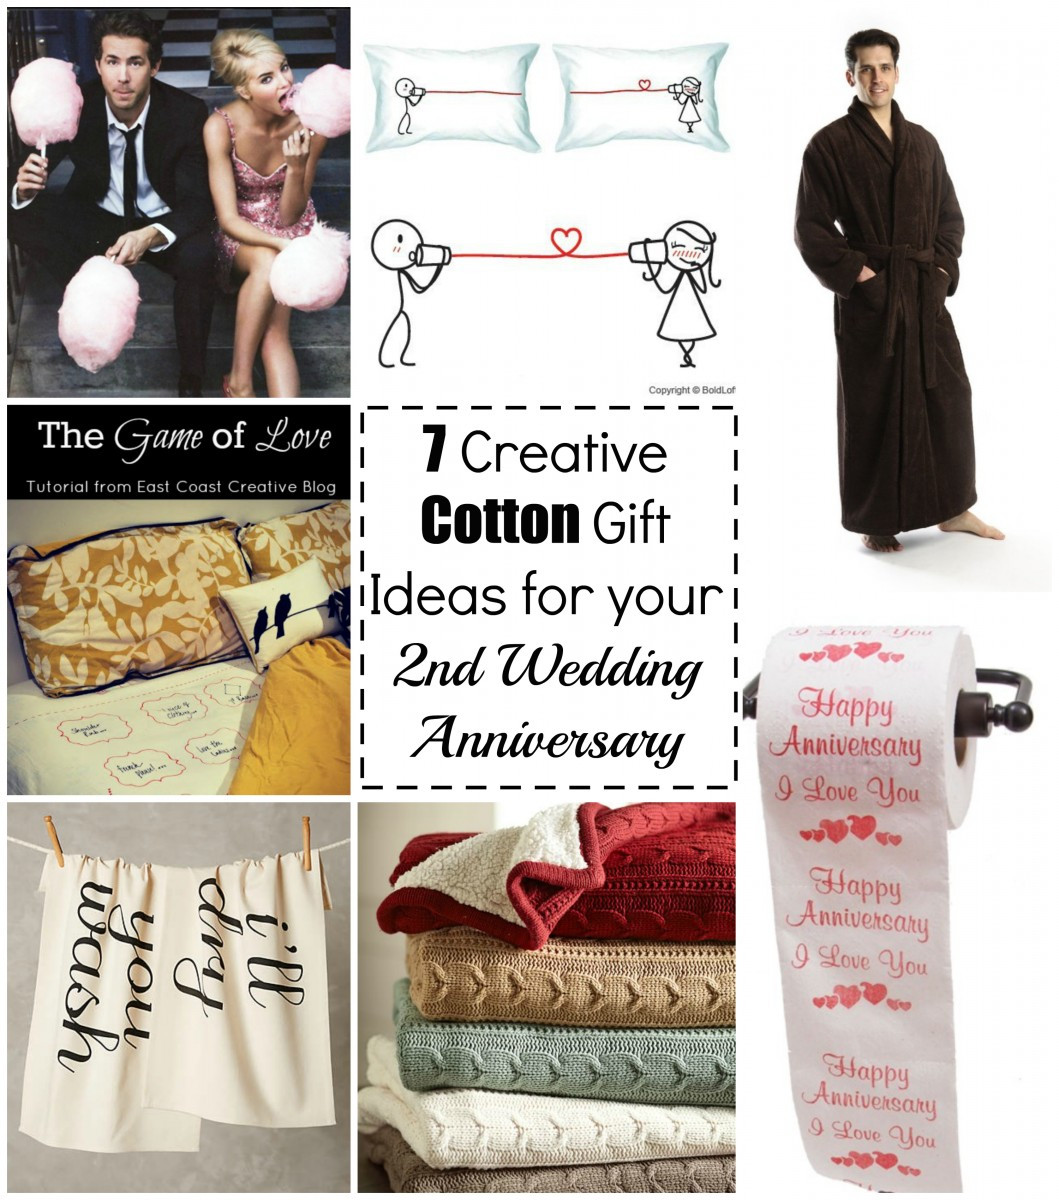 Second Wedding Anniversary Gift Ideas
 7 Cotton Gift Ideas for your 2nd Wedding Anniversary